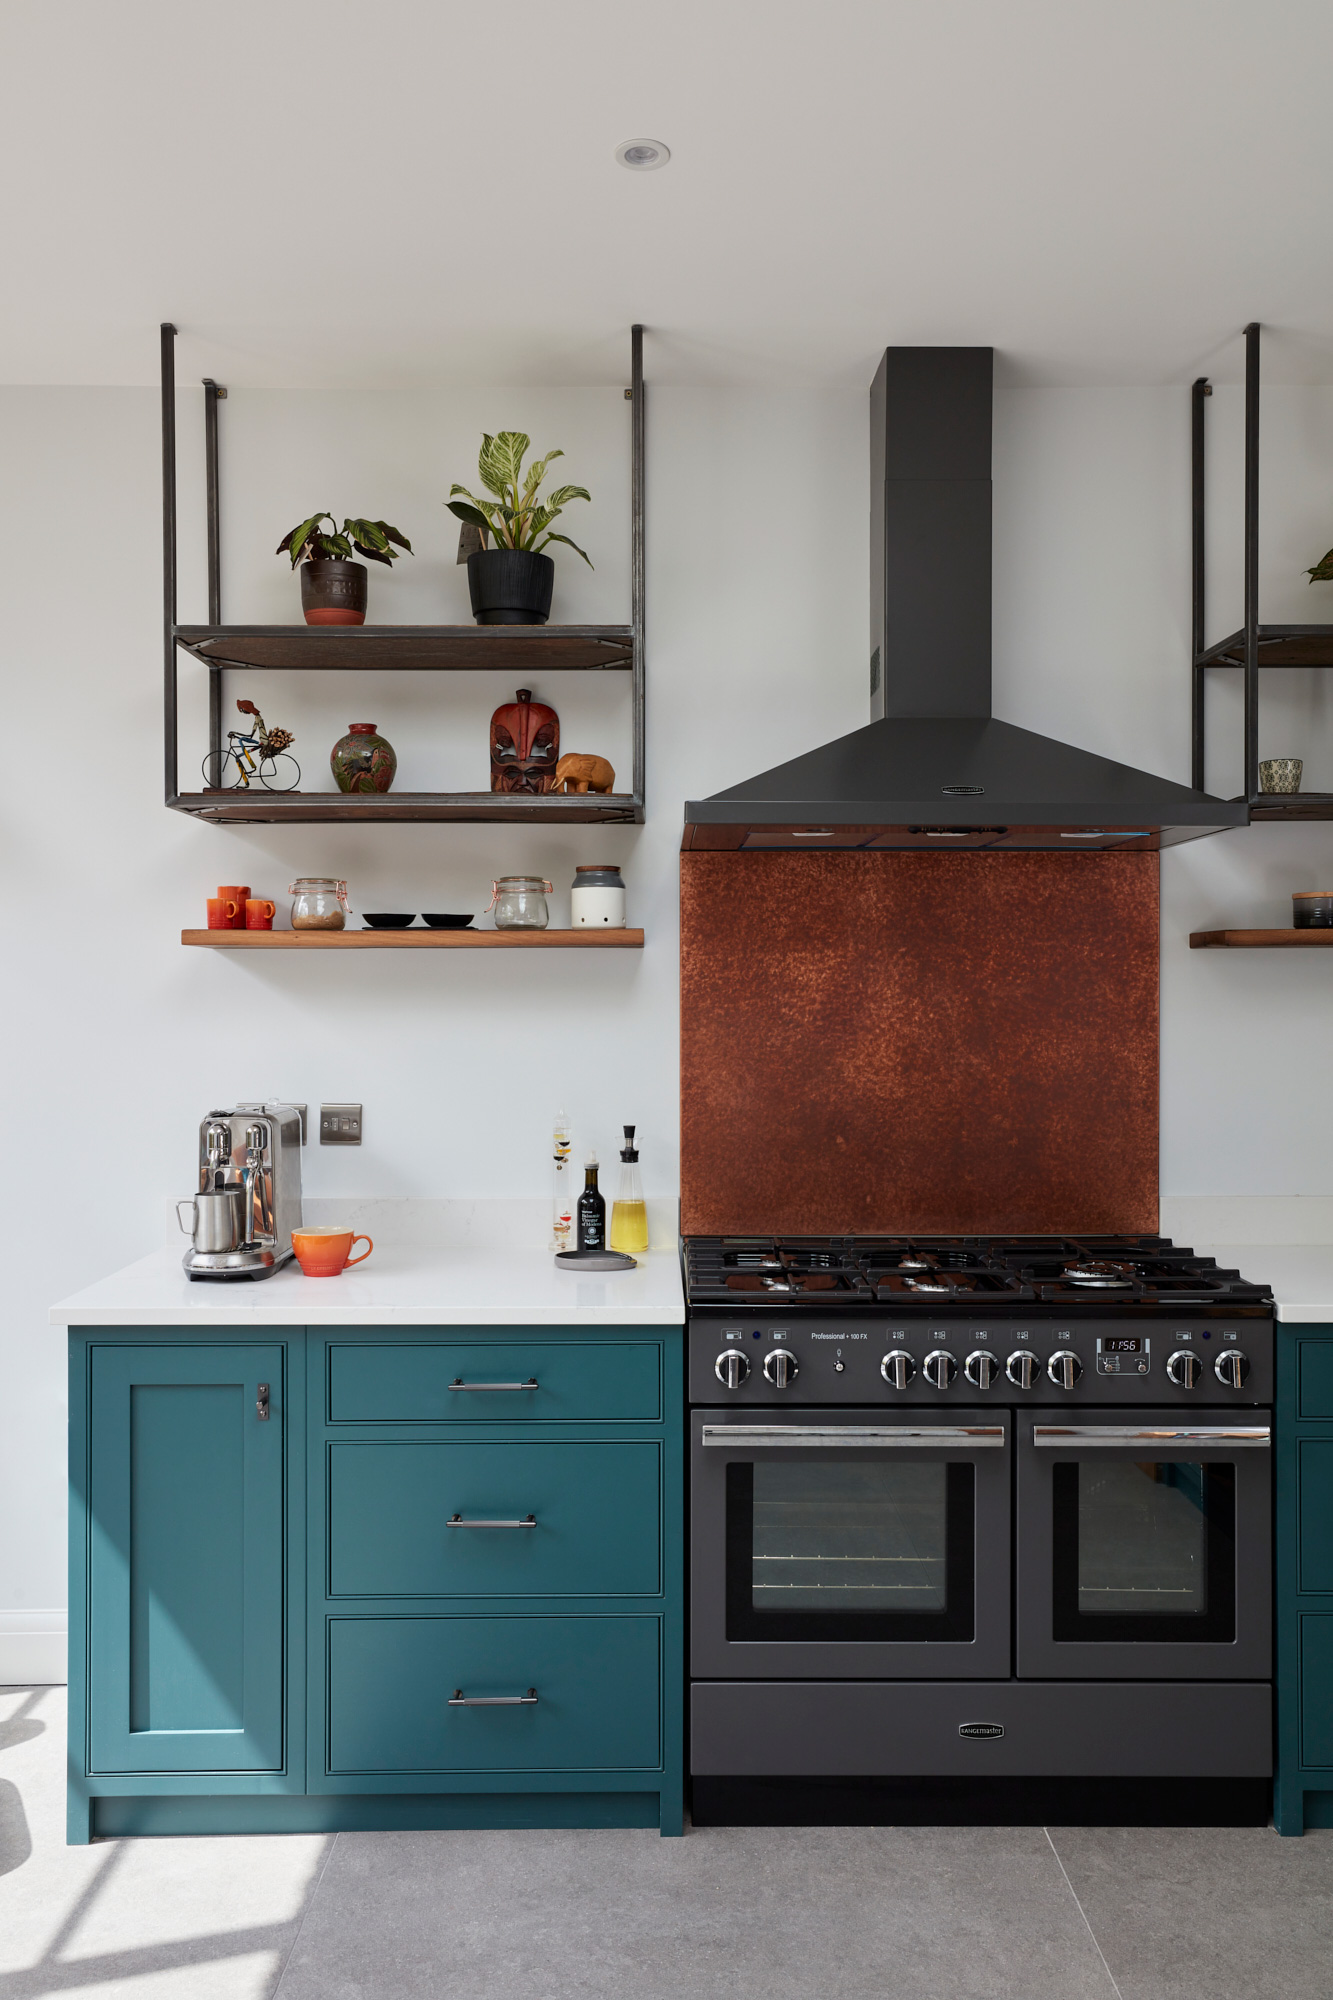 Copper backsplash and open industrial shelves in bespoke painted kitchen